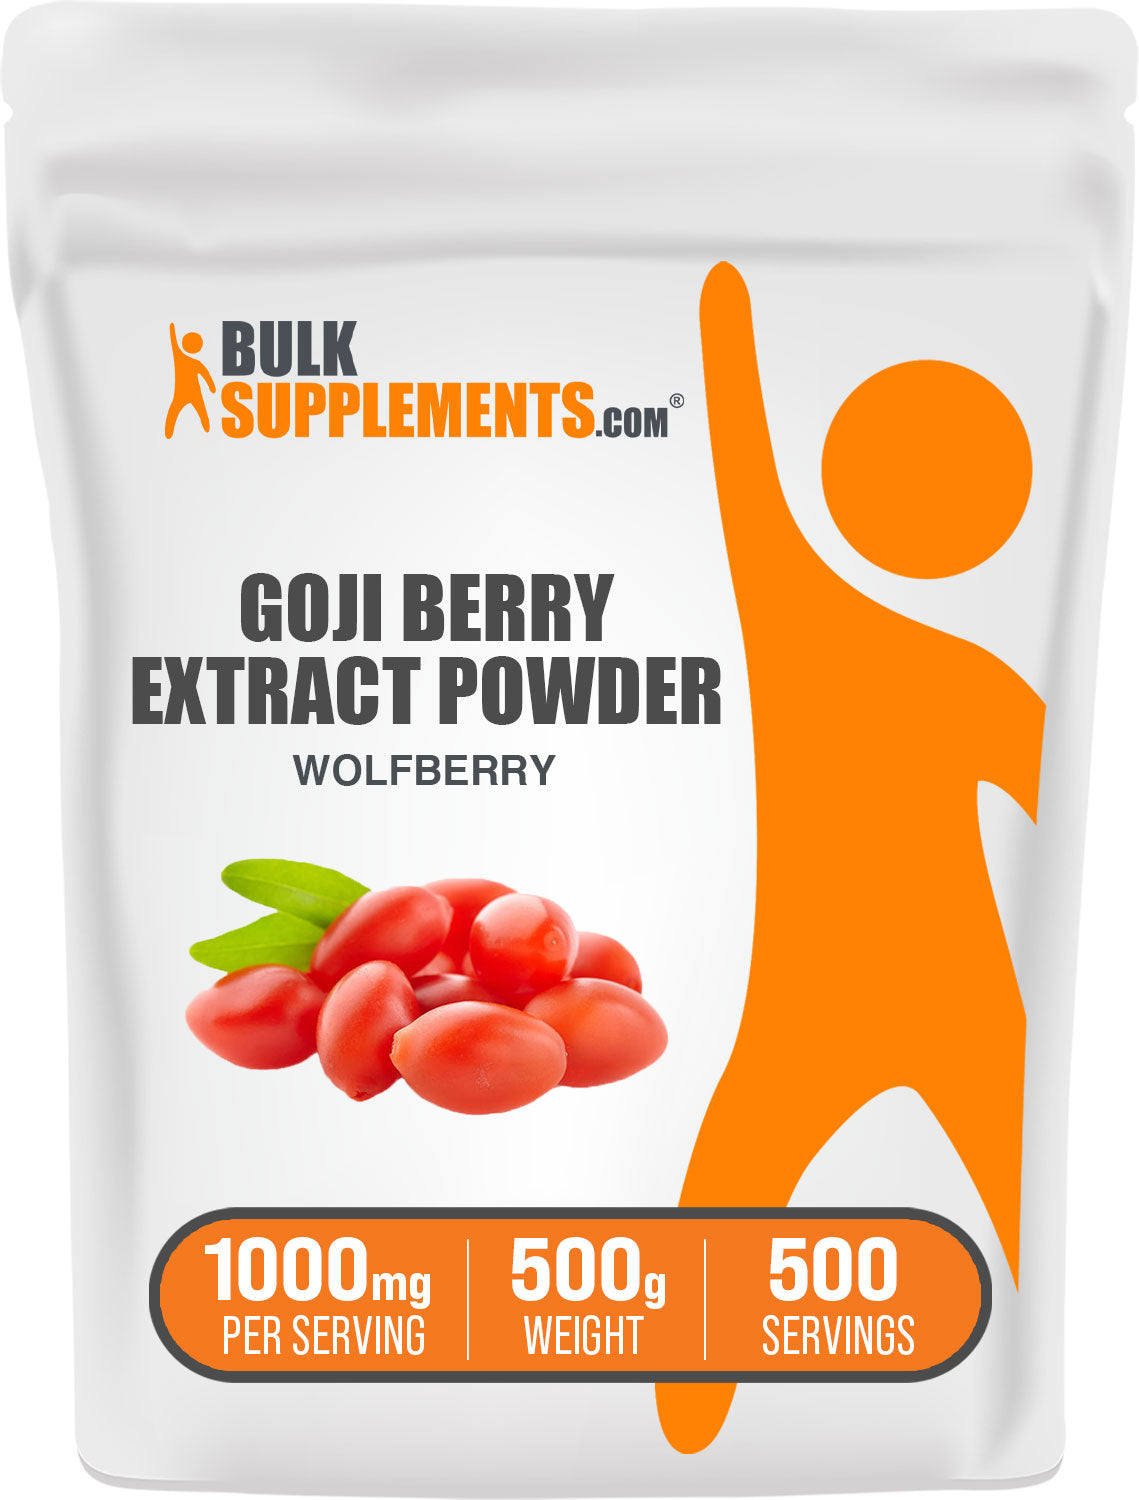 BulkSupplements Goji Berry Extract Powder Wolfberry 500g bag